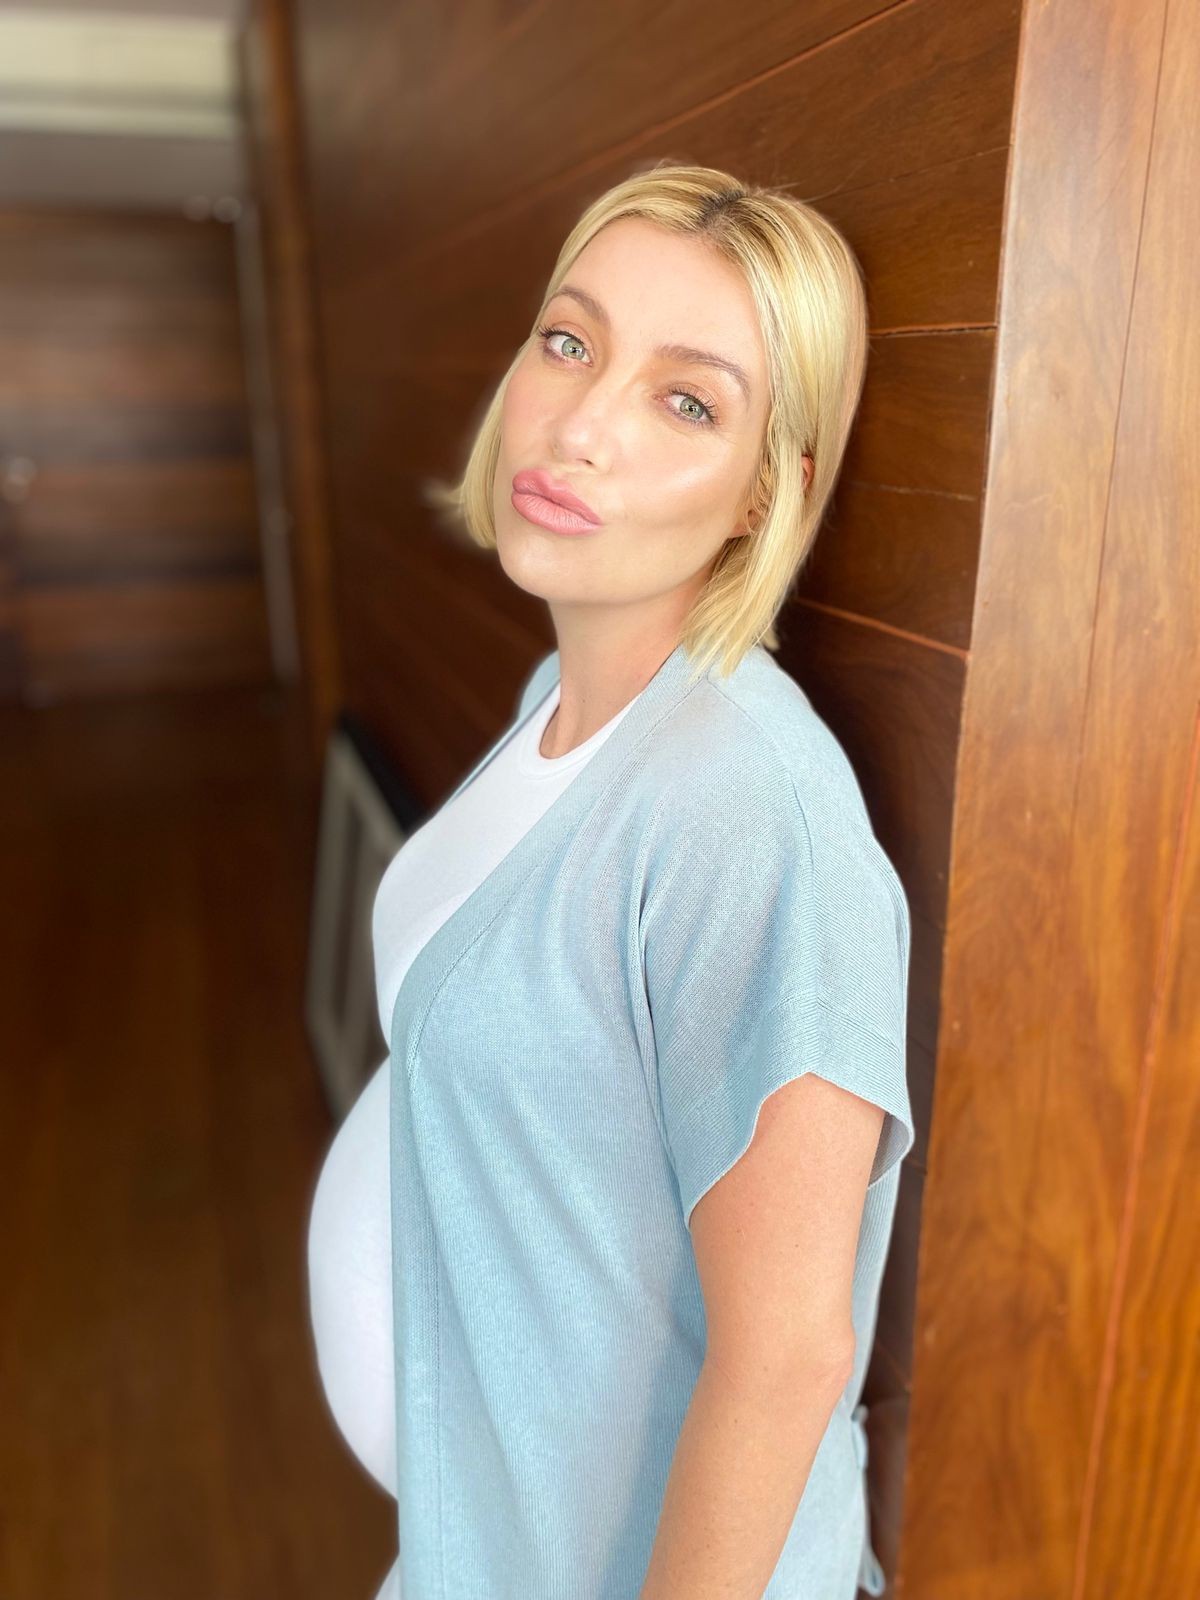  Luiza Possi na reta final da gravidez  (Foto: Reprodução / Instagram )